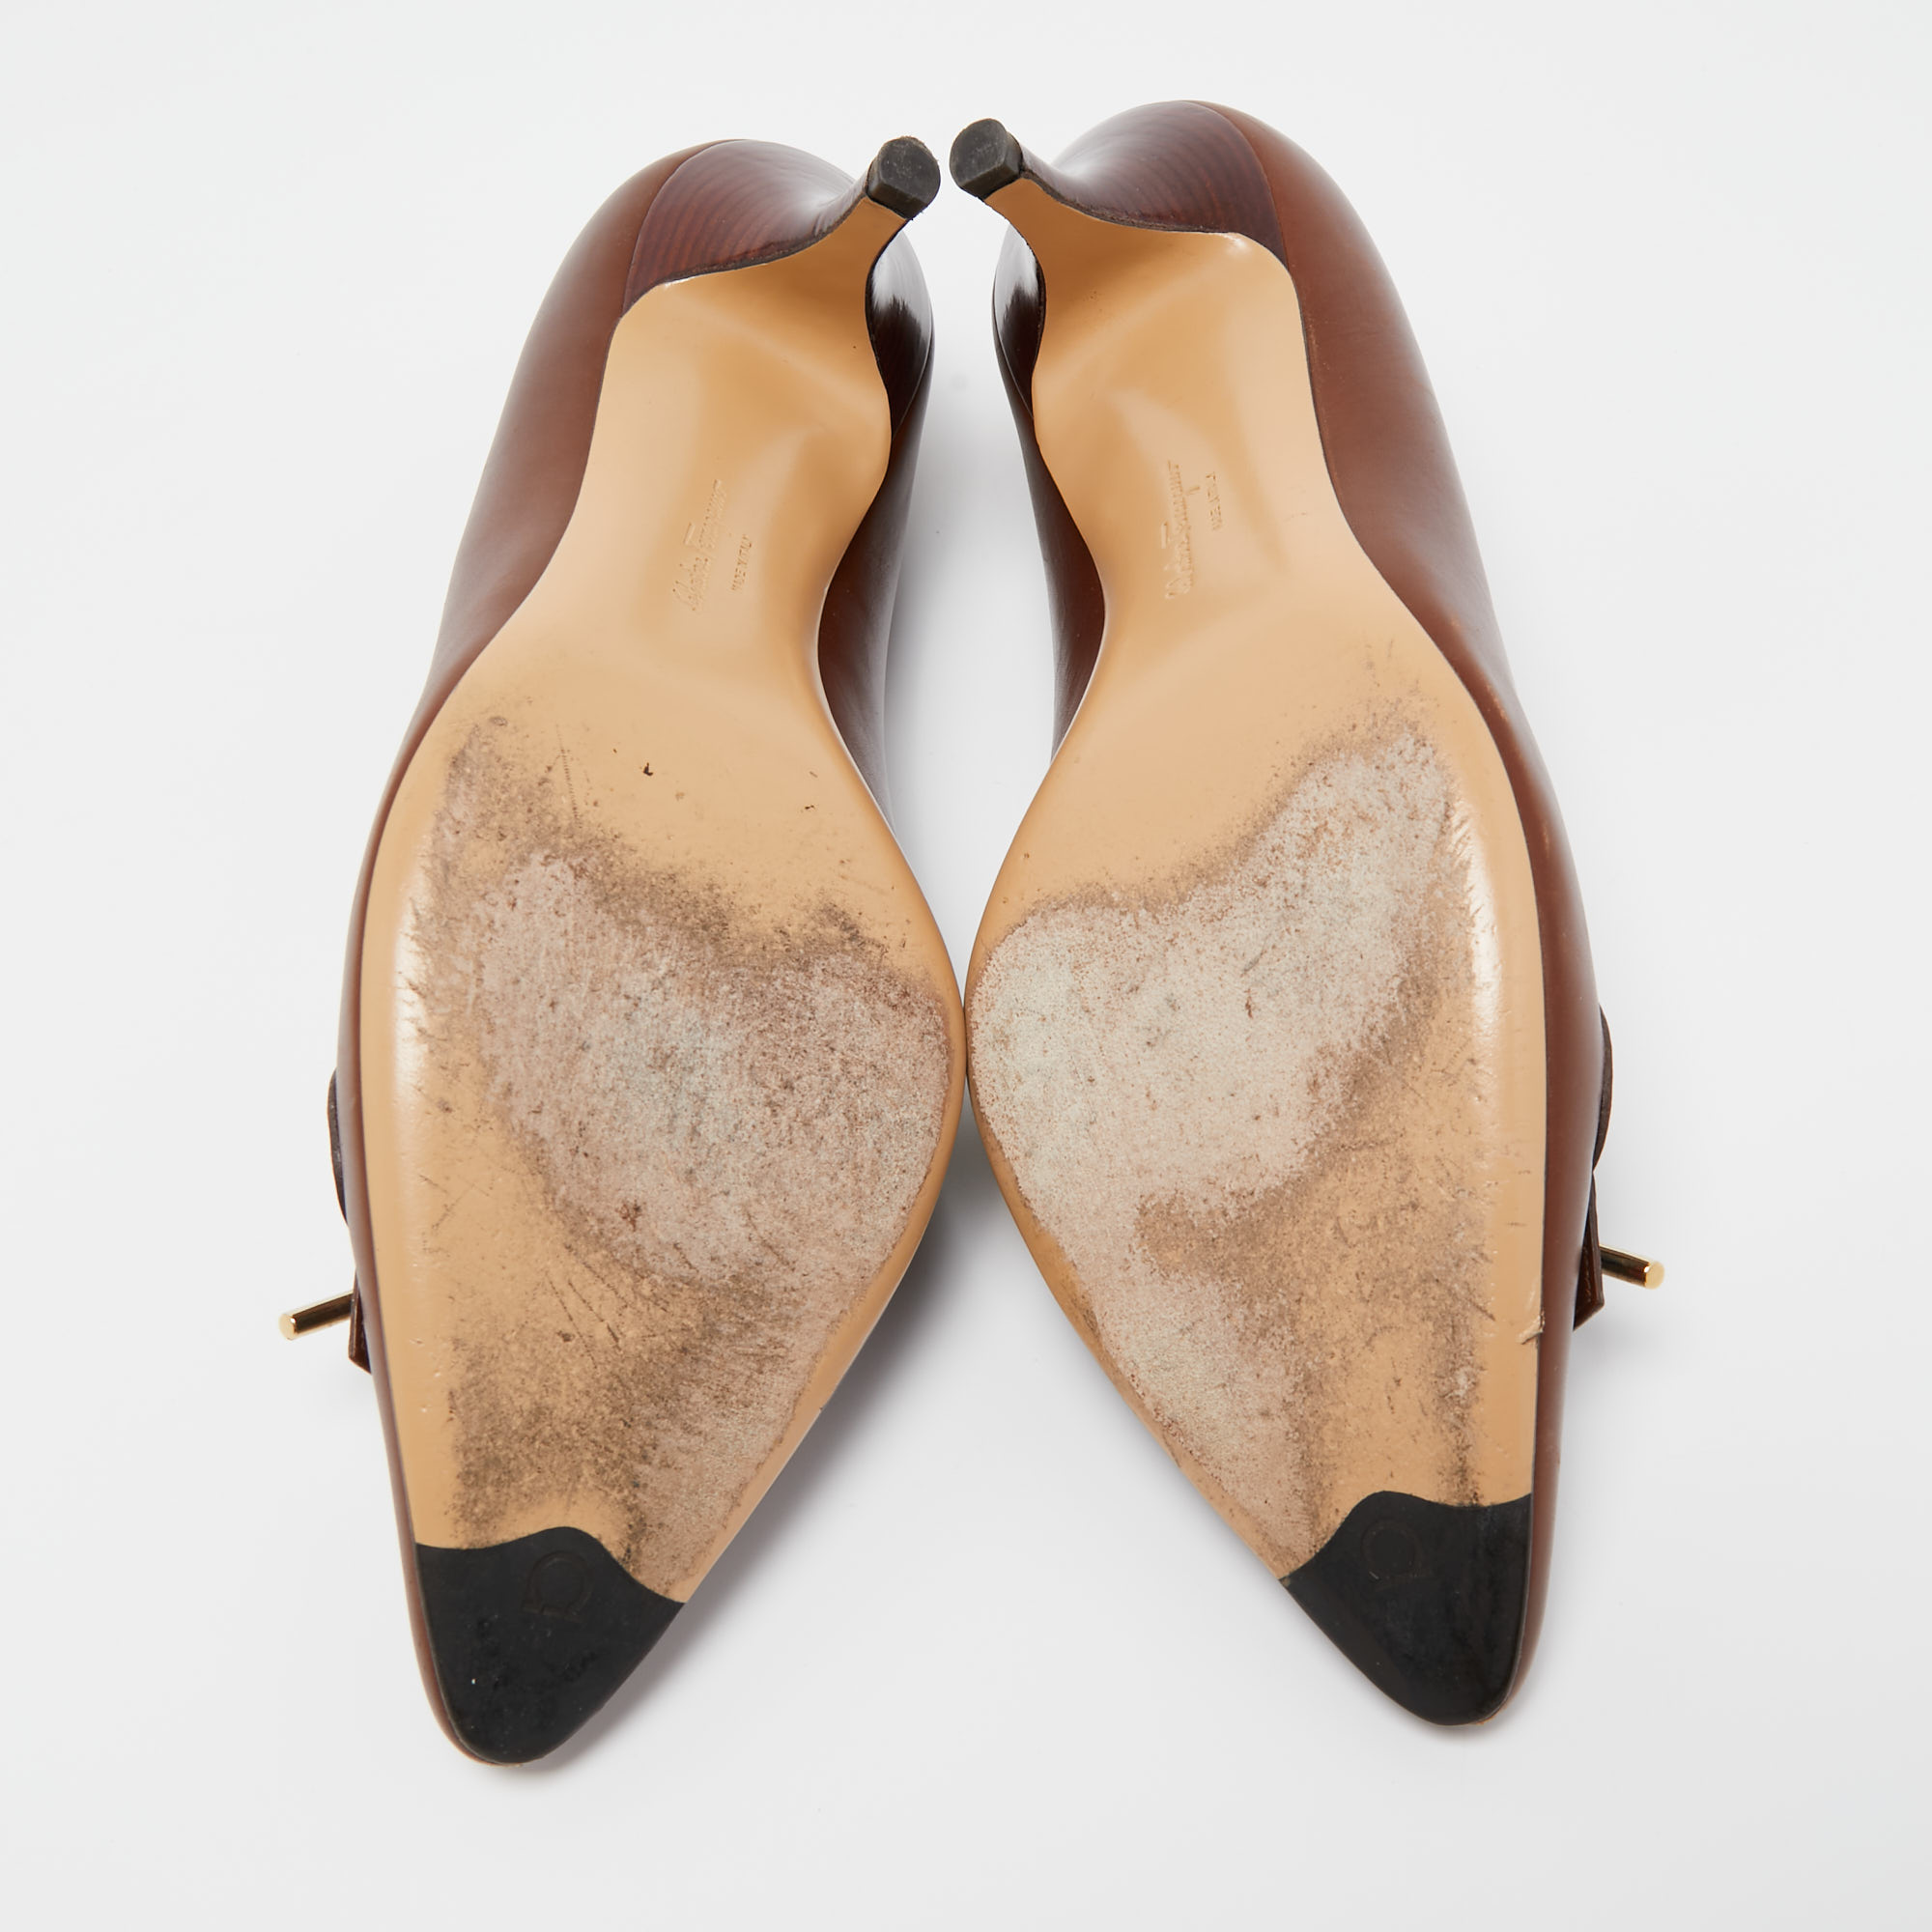 Salvatore Ferragamo Brown Leather Loafers Pumps Size 40